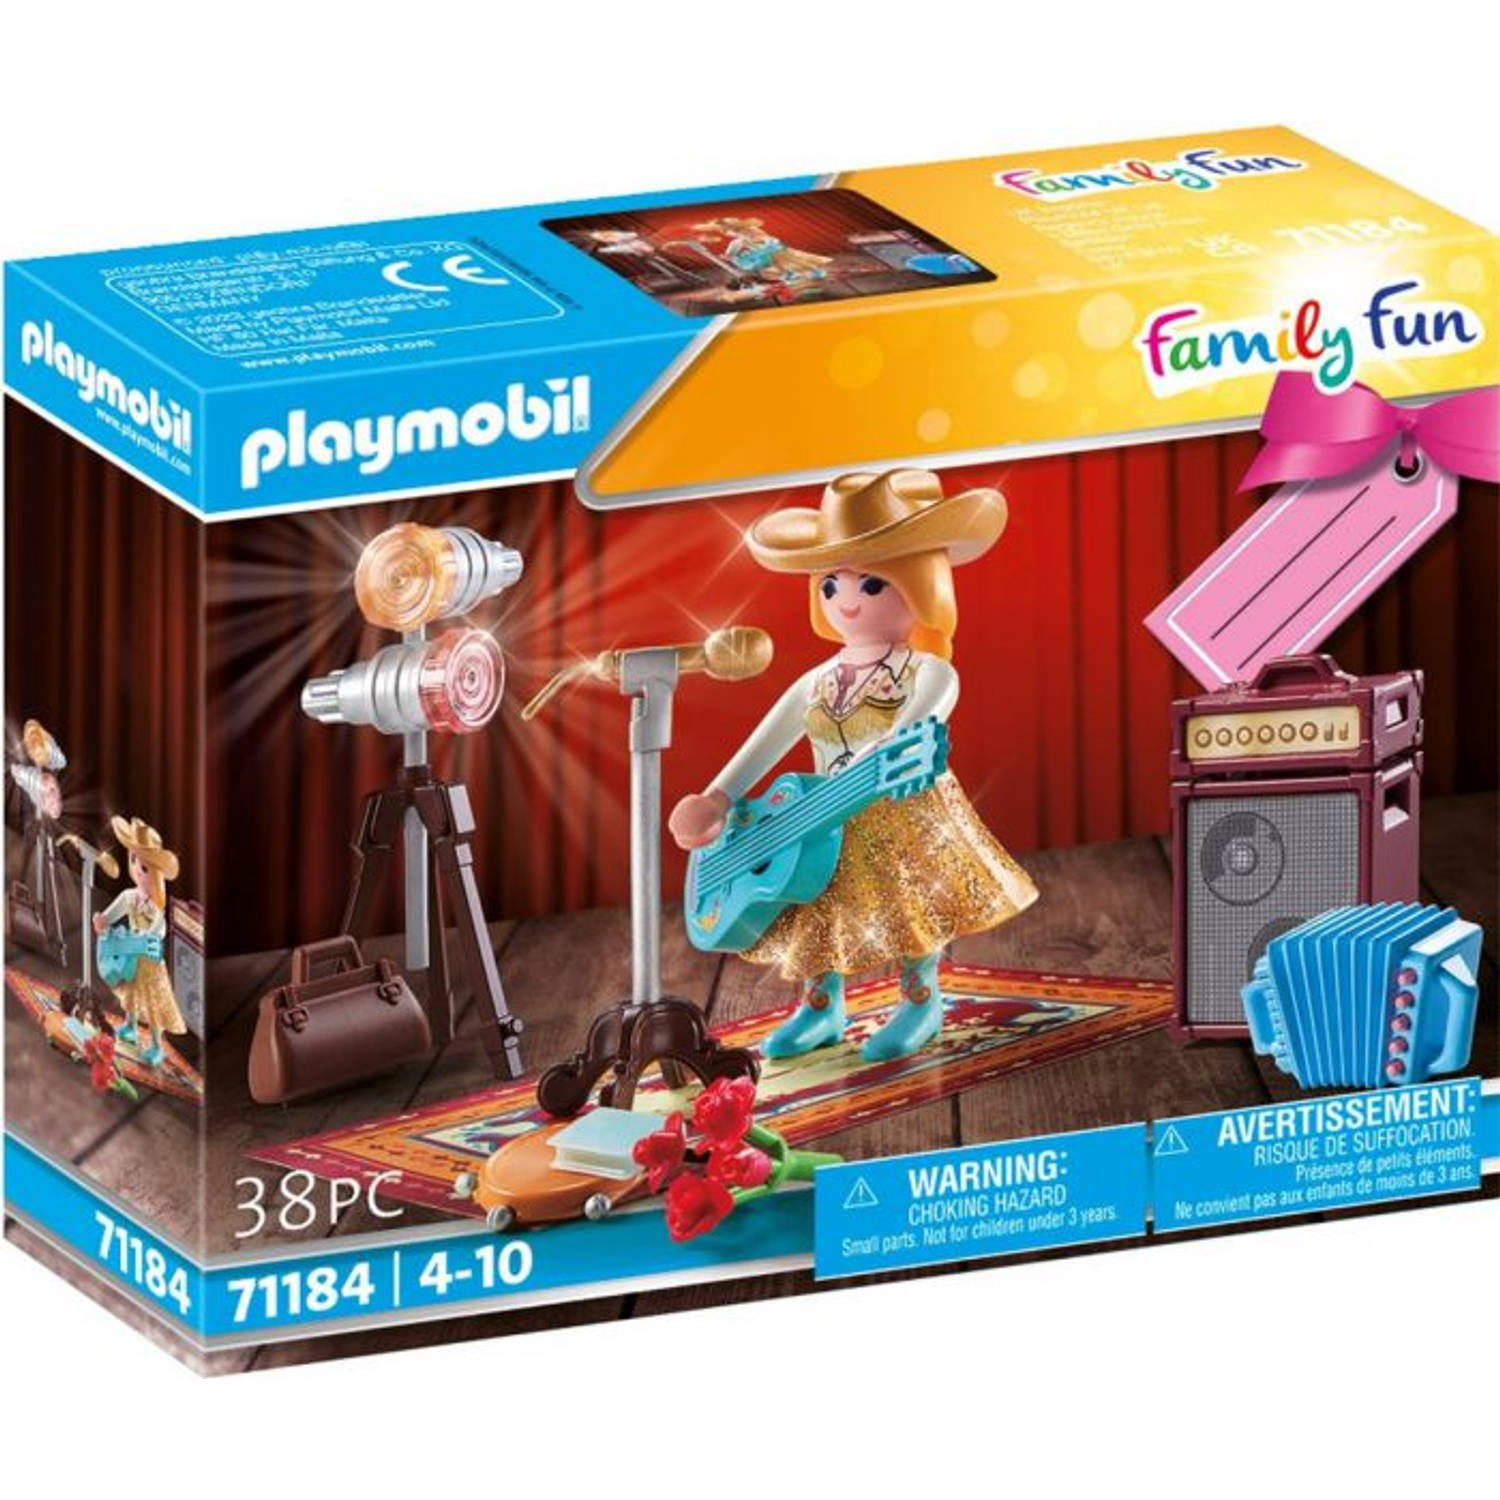 Playmobil® Constructie-speelset Country Sängerin (71184), Family Fun (38 stuks)